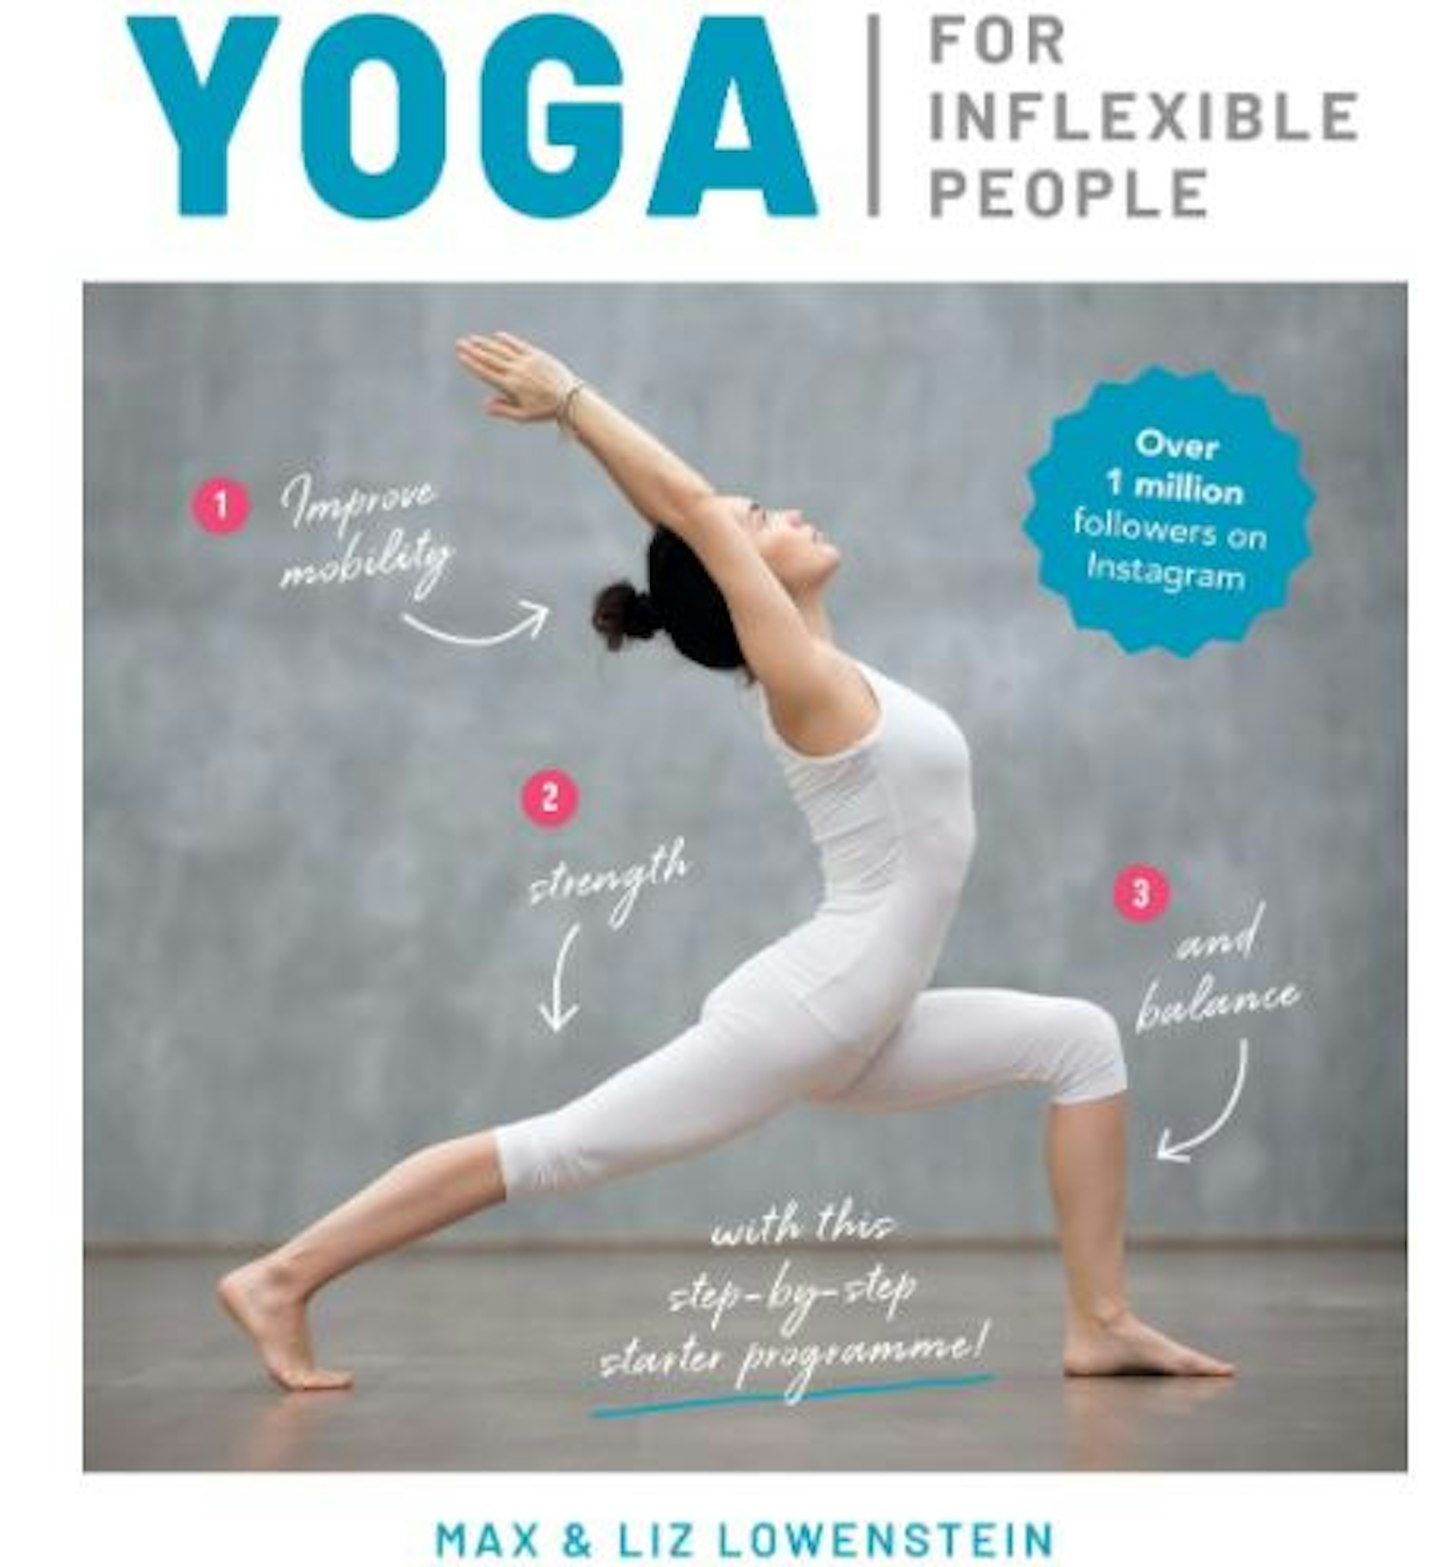 Yoga for Inflexible People u2013 Max & Liz Lowenstein